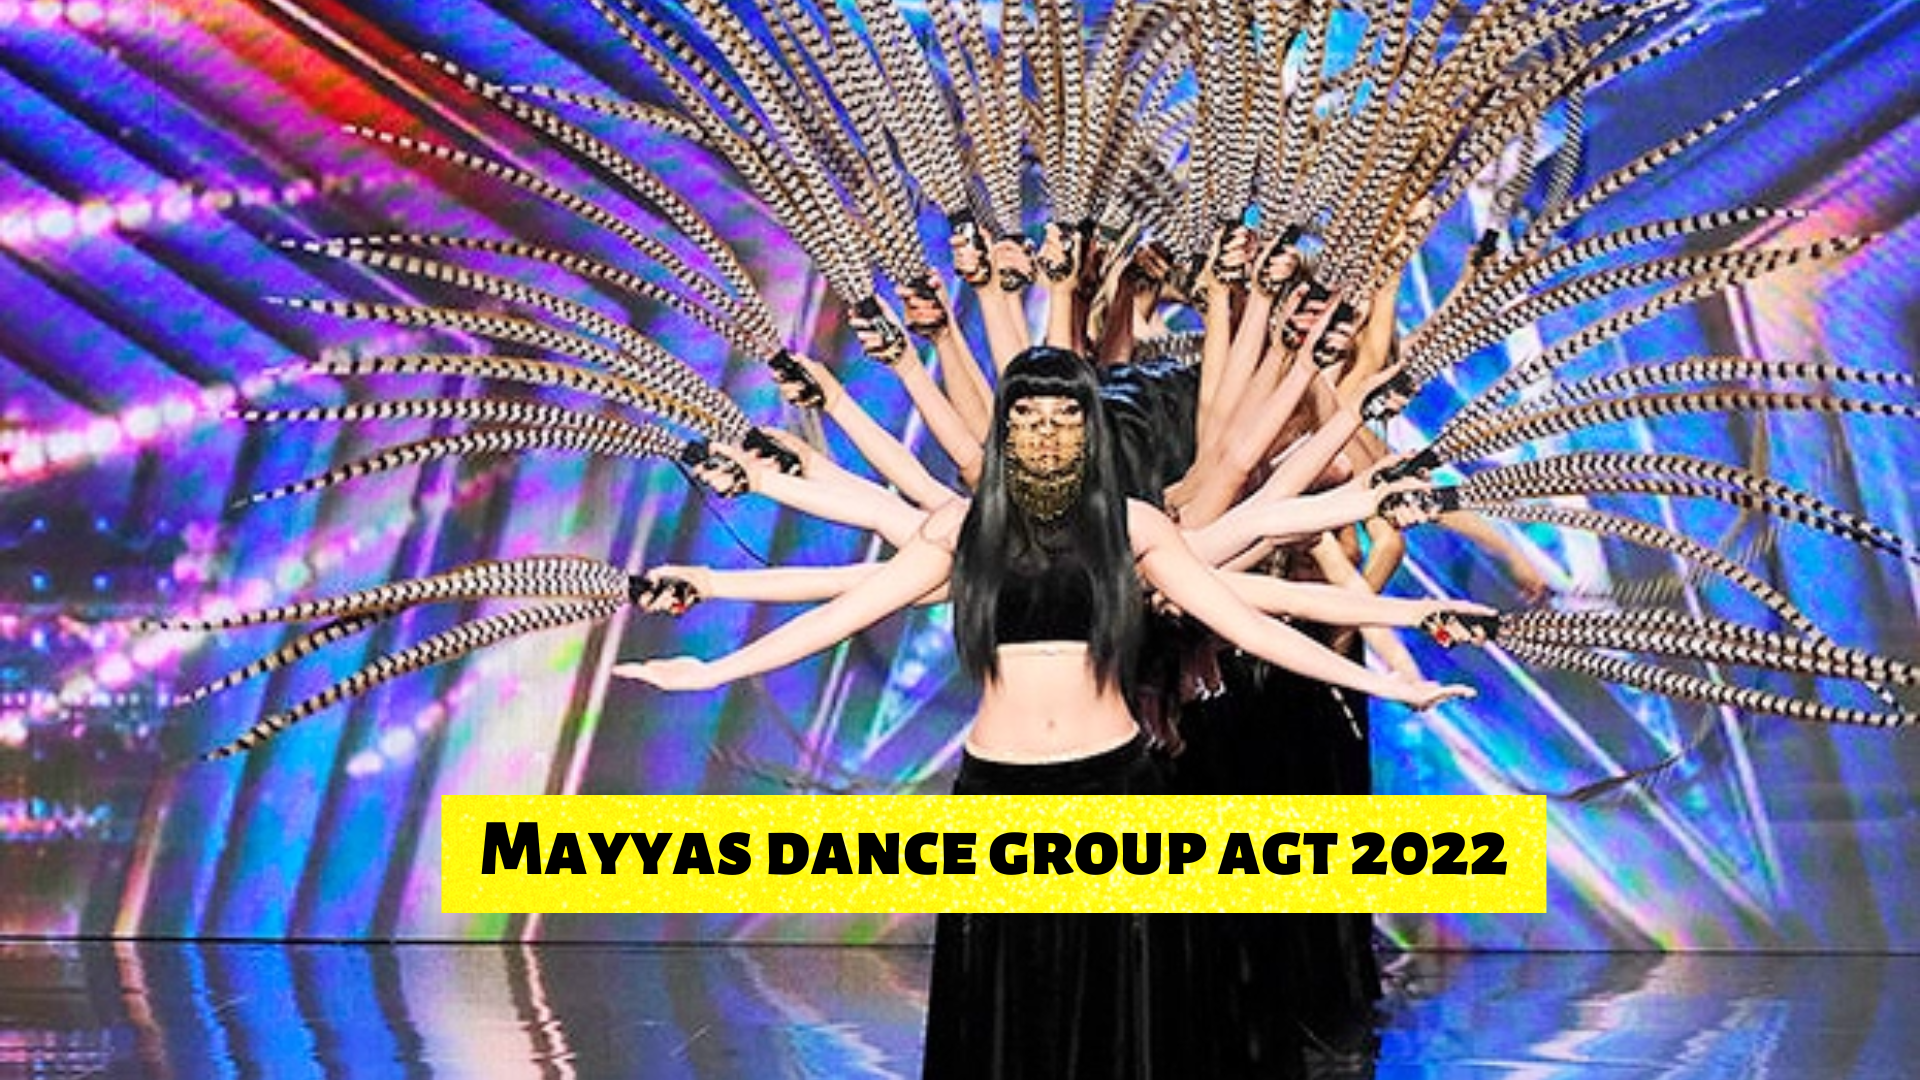 Mayyas dance group